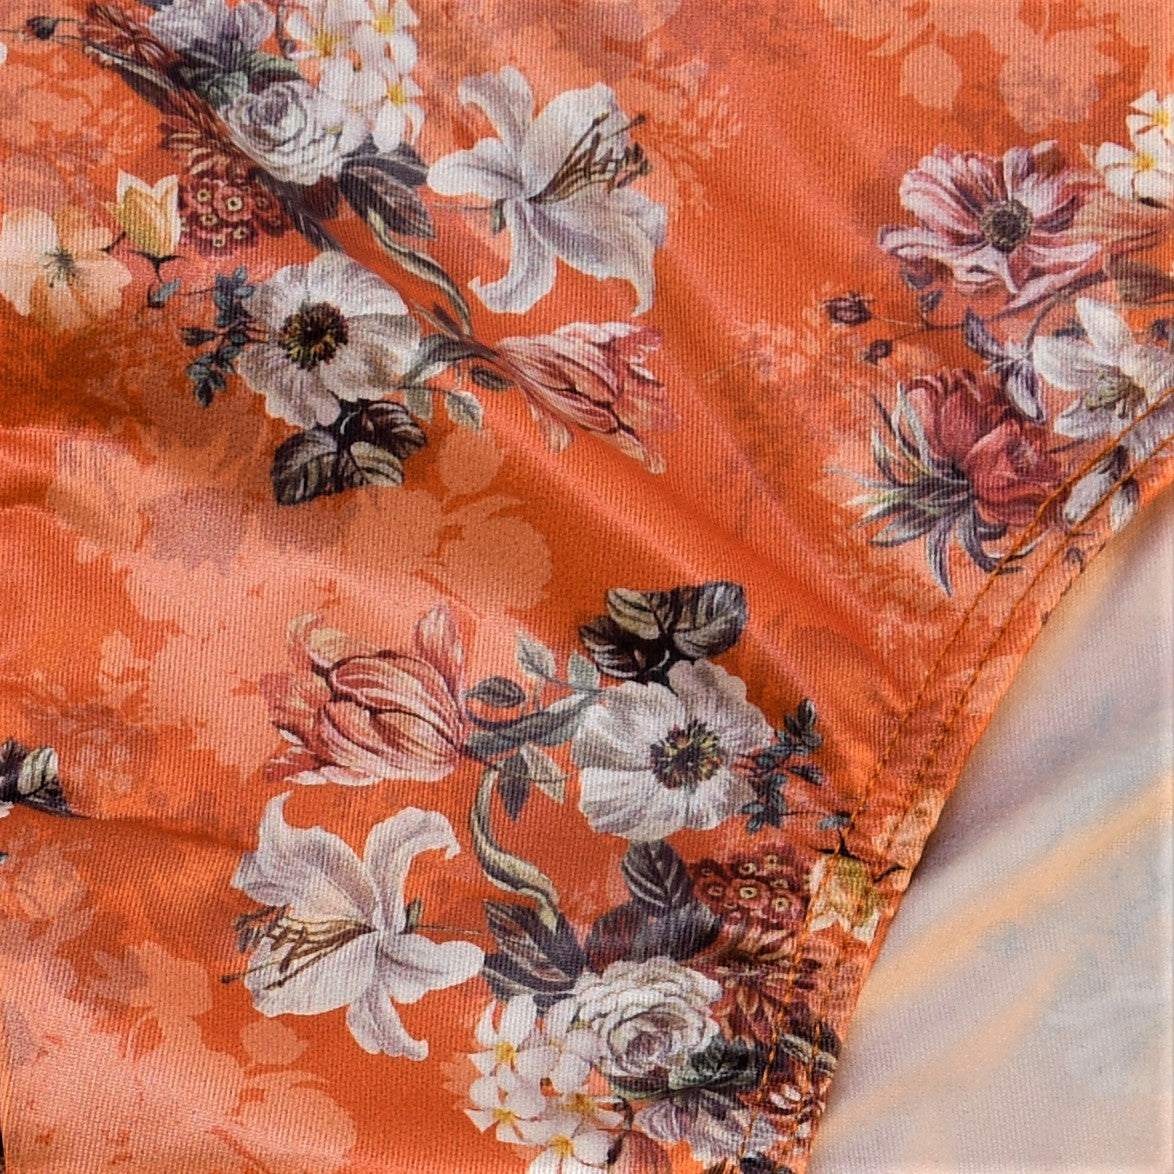 Printed Bikini Brief by Etseo Men's Underwear orange fabric detail